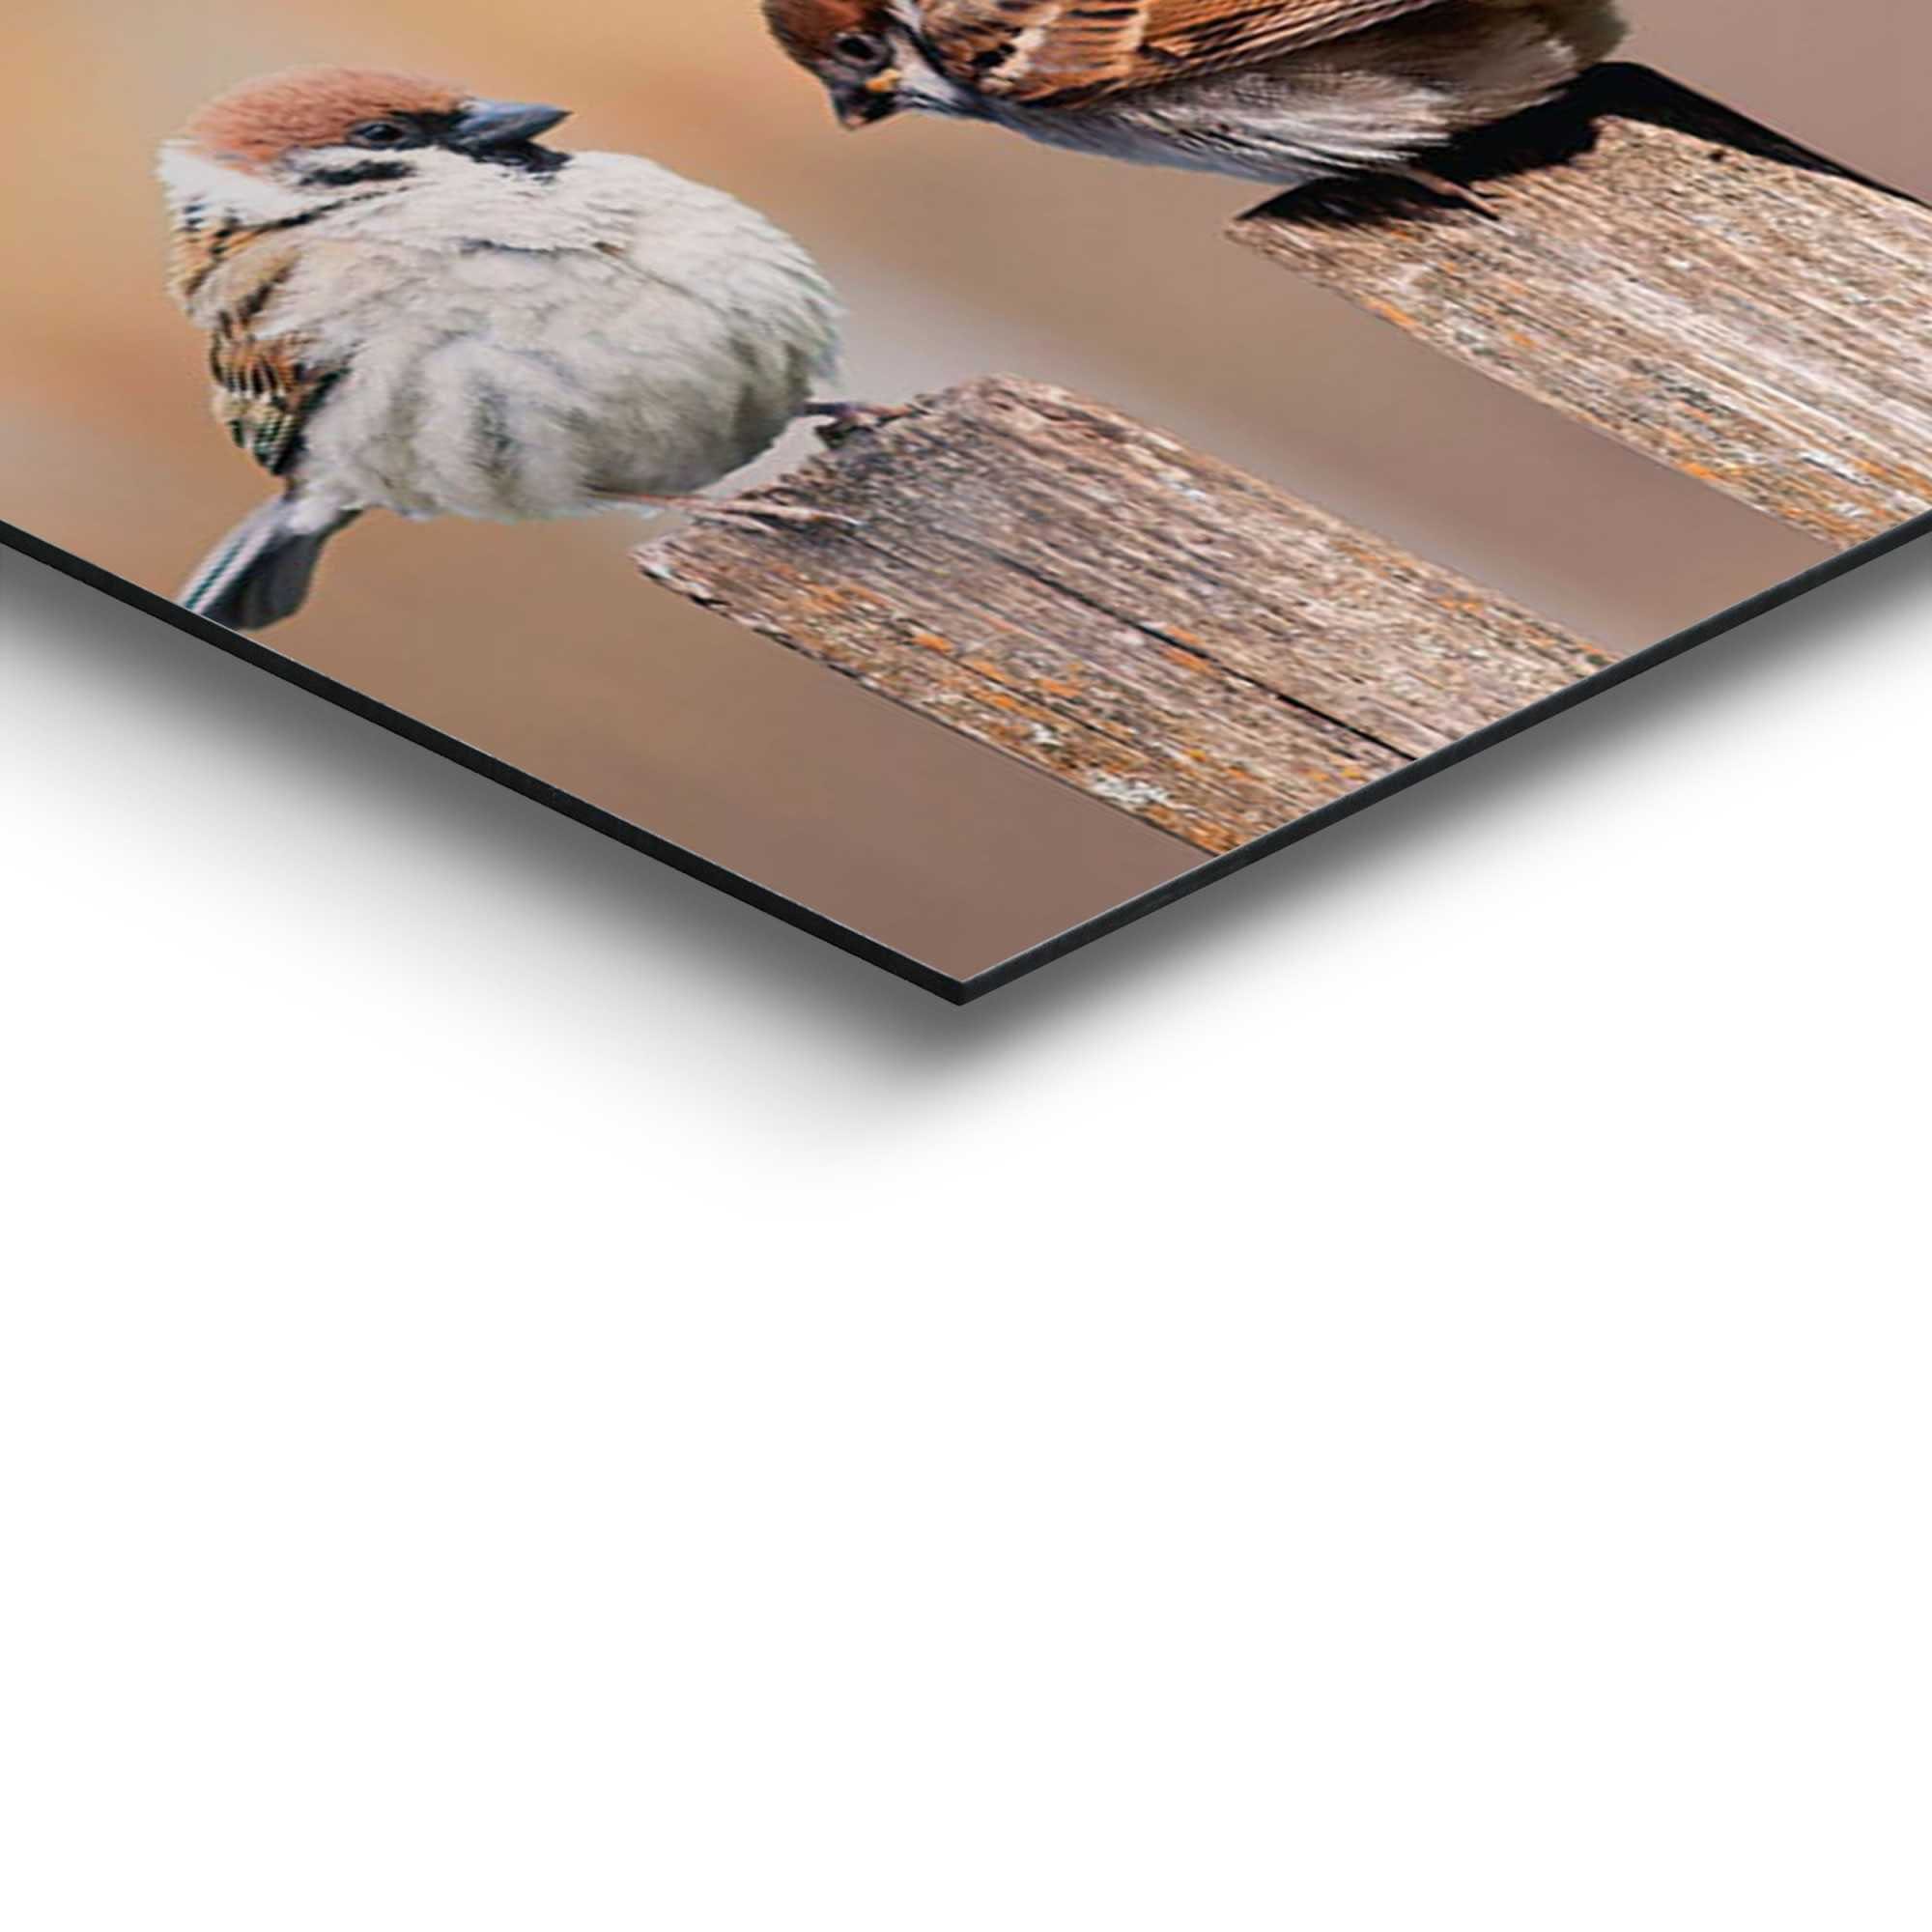 Deco Bird Reinders! Family 30x90 Holzbild Panel